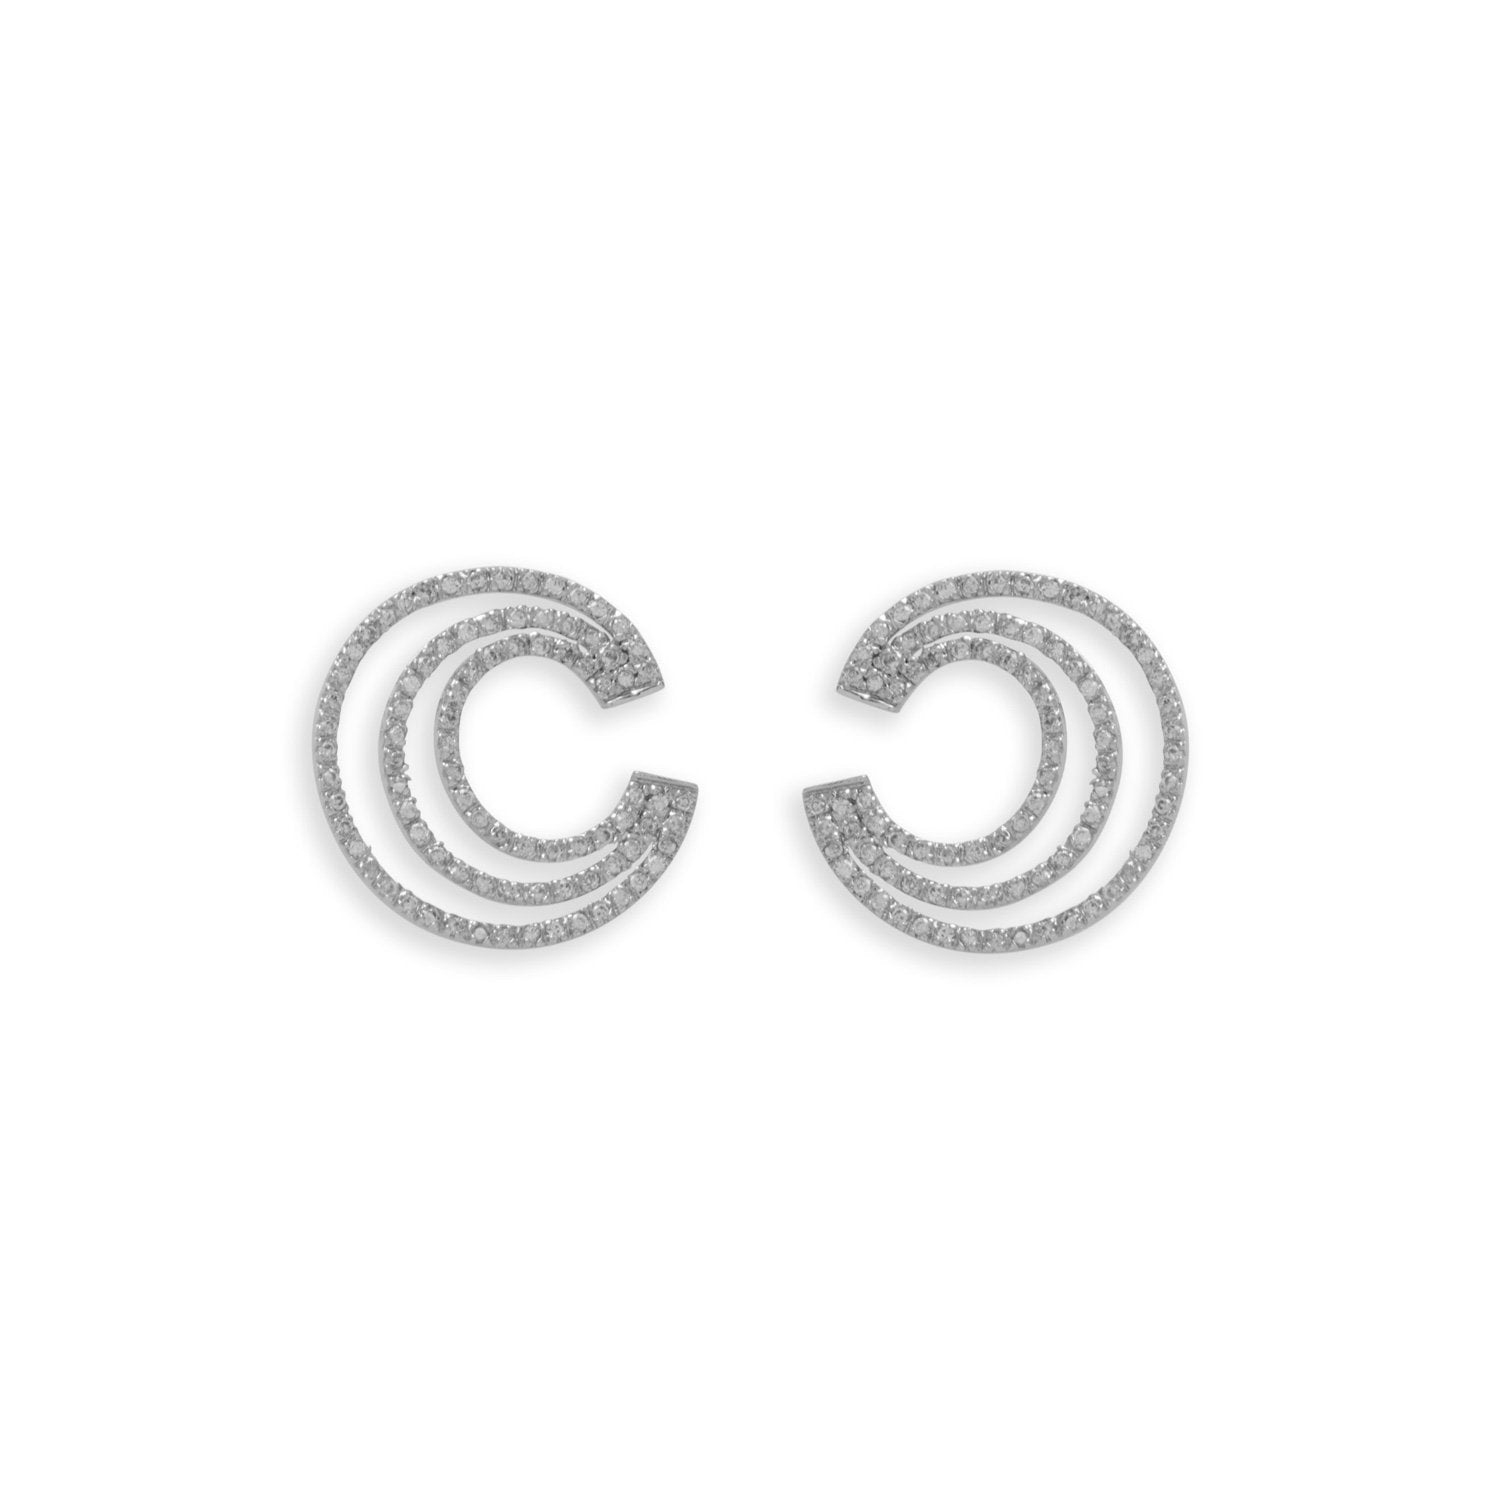 Rhodium Plated Triple "C" CZ Post Earrings - Joyeria Lady